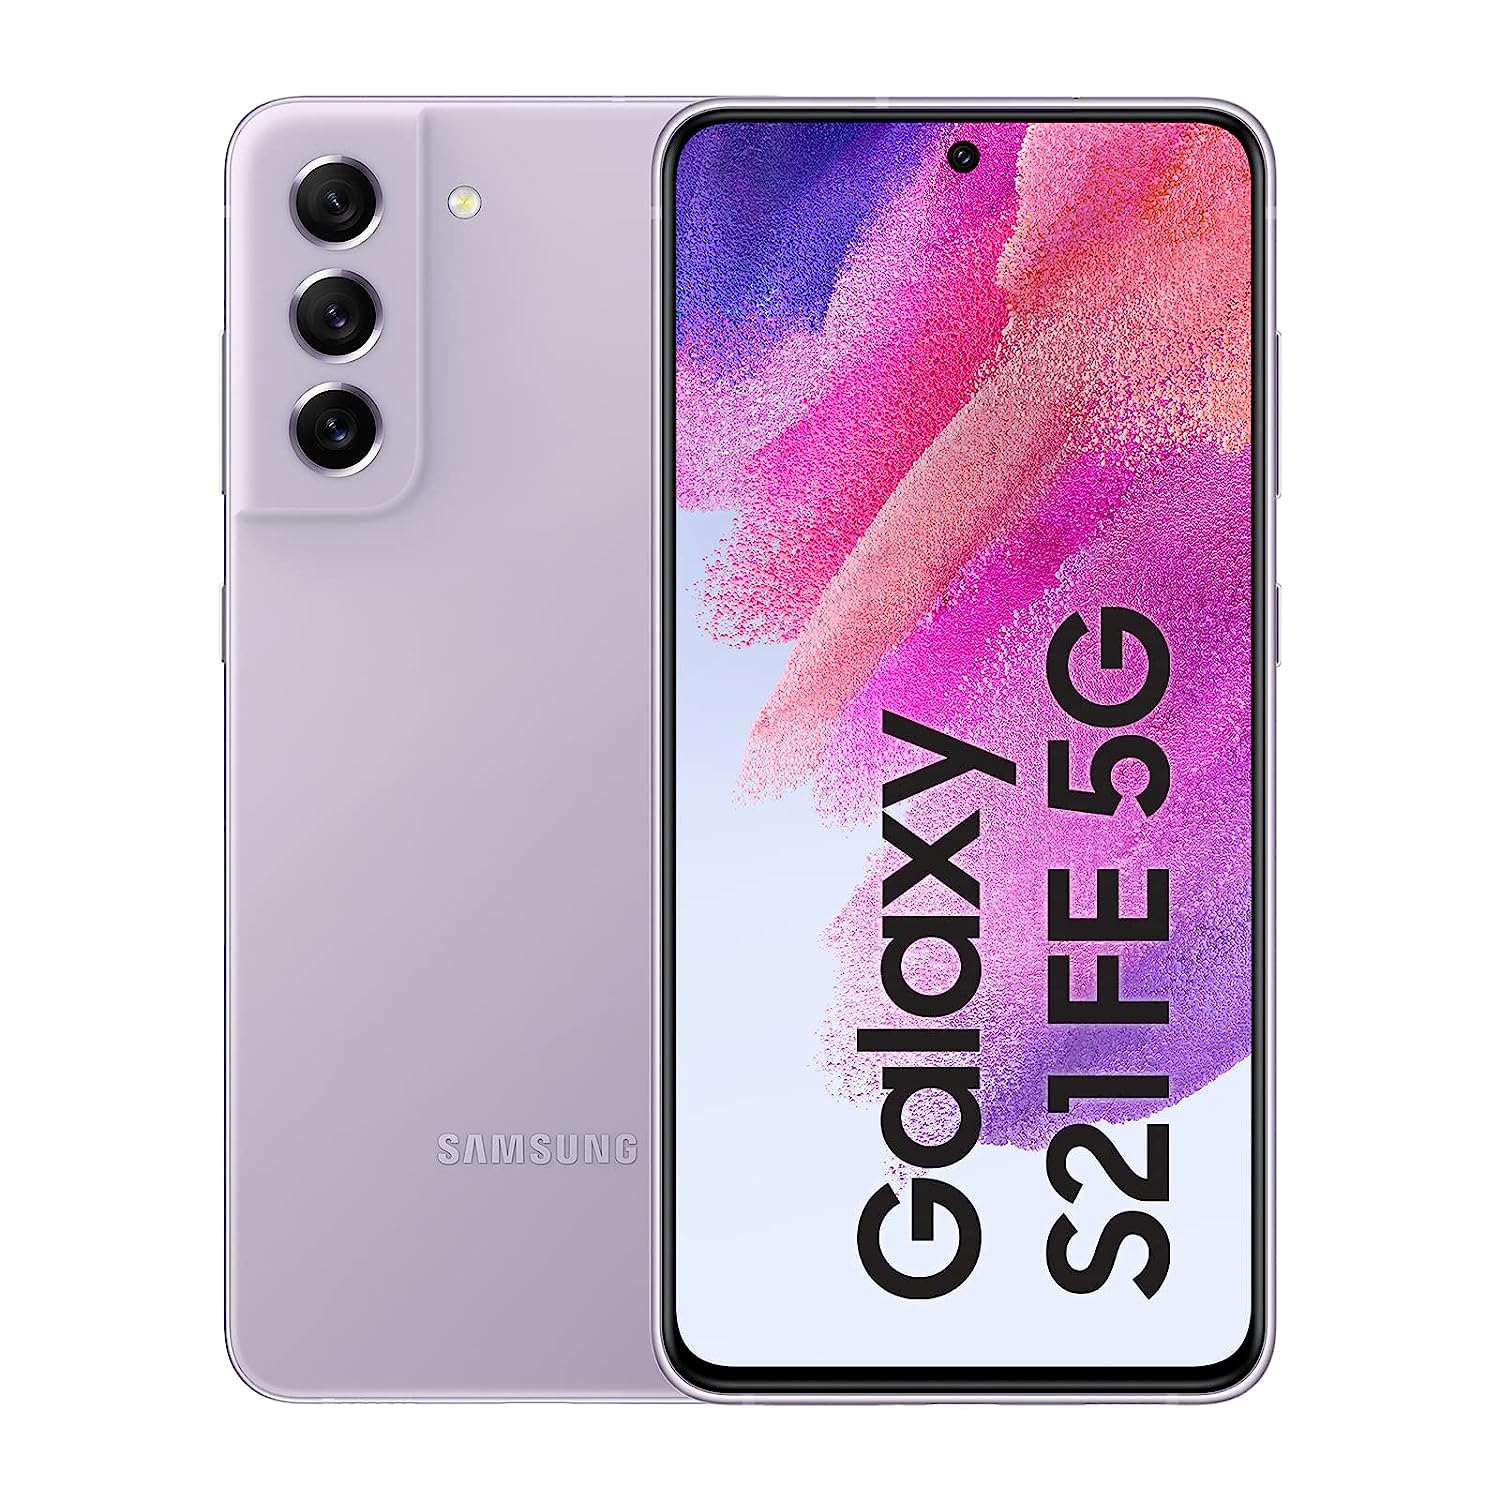 Samsung Galaxy S20 Fe 5g (Cloud Lavender, 128 Gb) (8 Gb Ram) at Rs